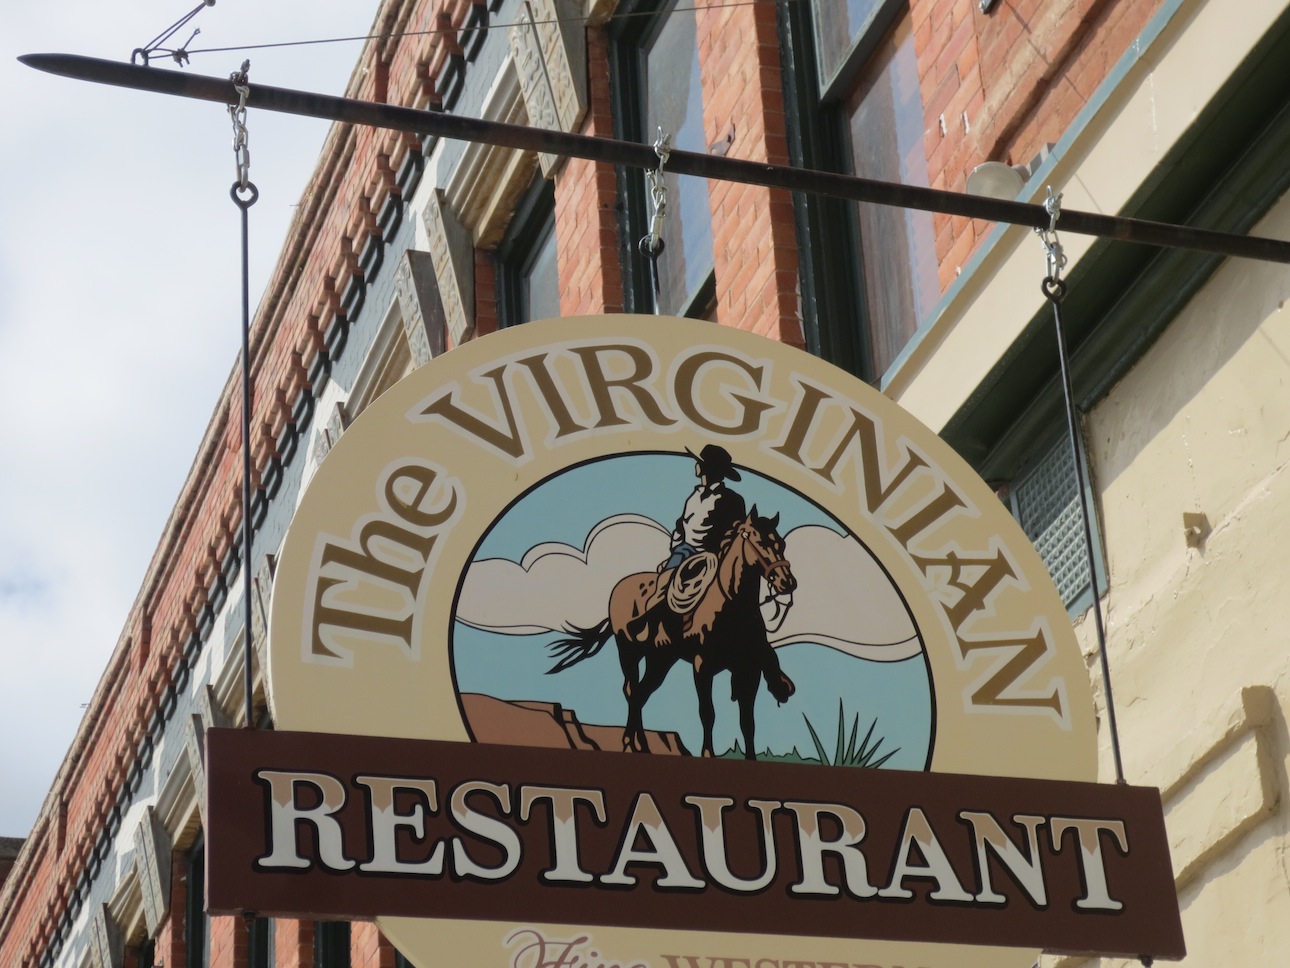 Virginian Restaurant sign.